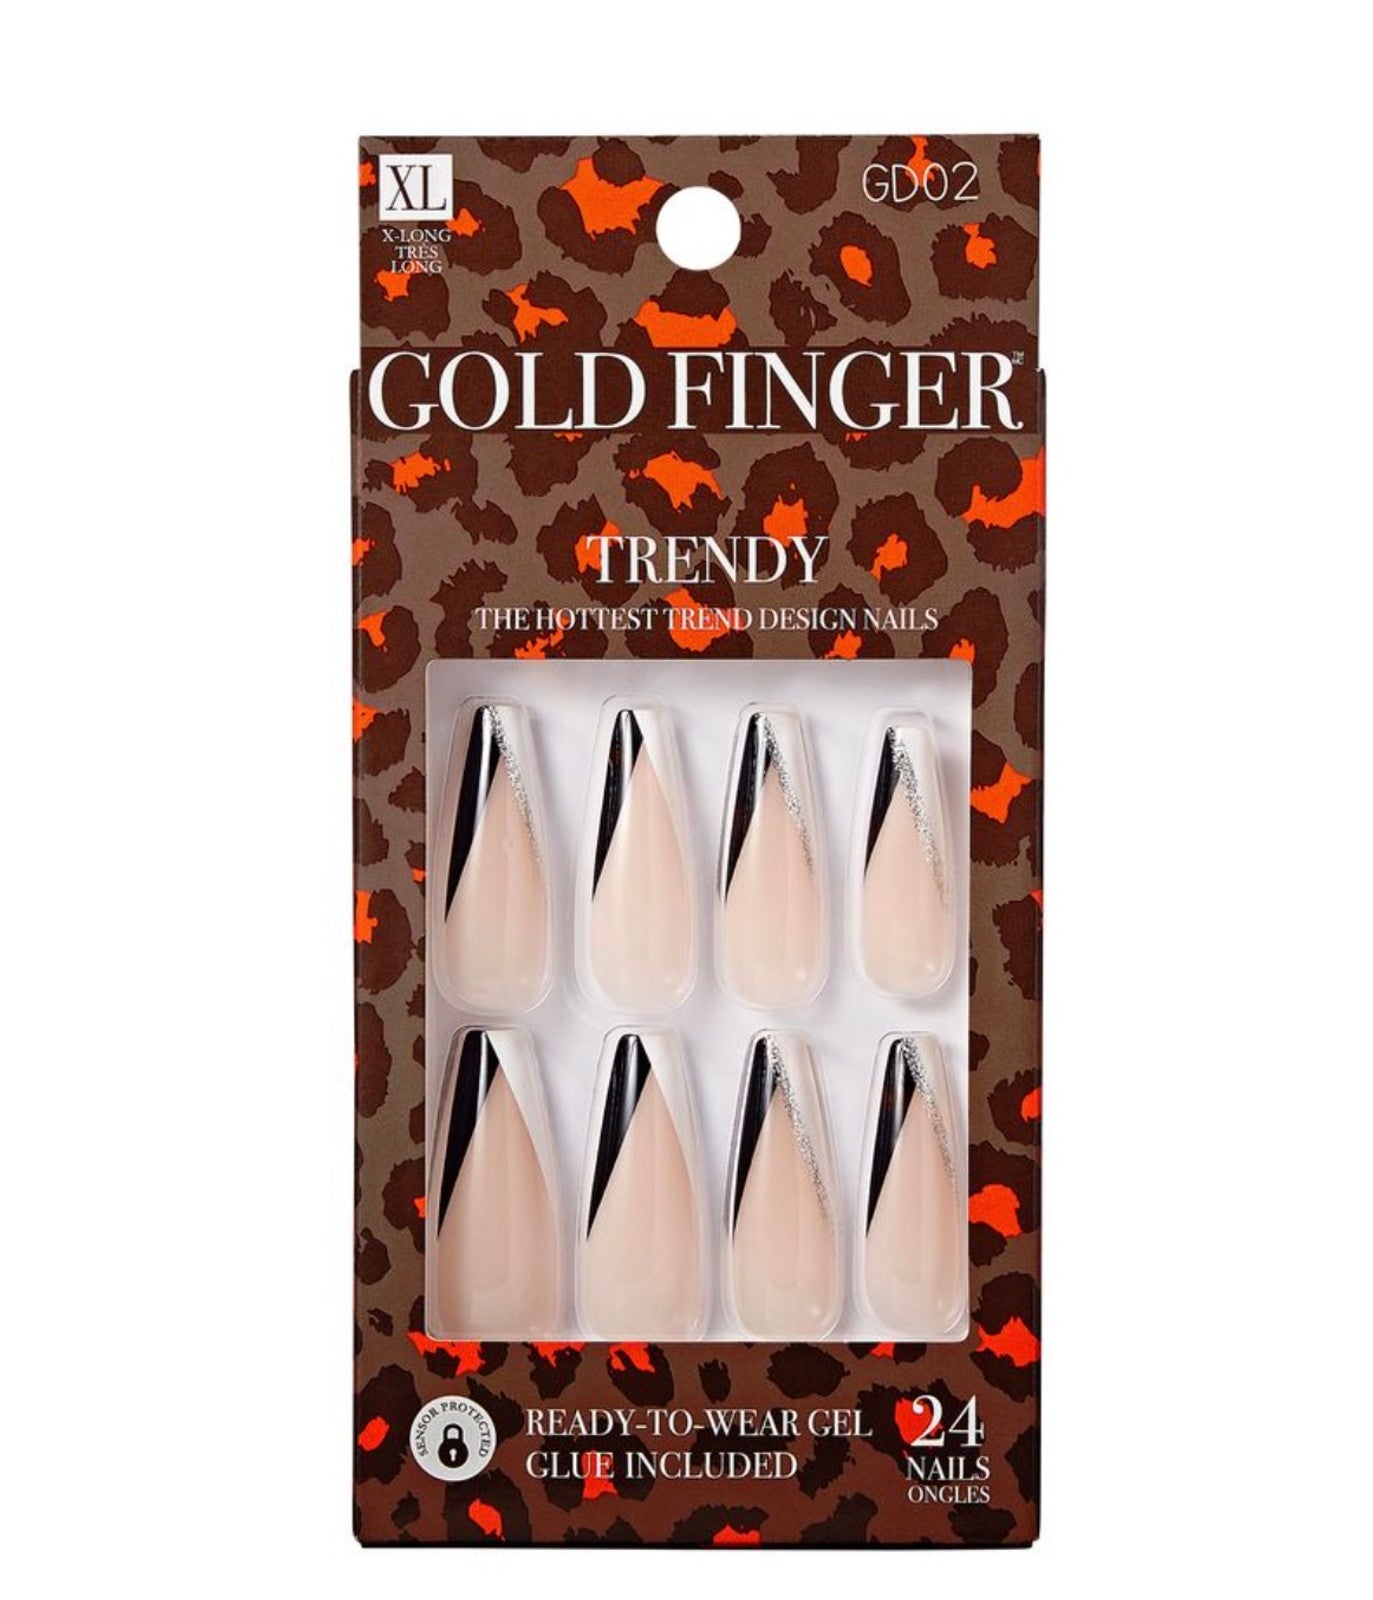 KISS Gold Finger Trendy Nails